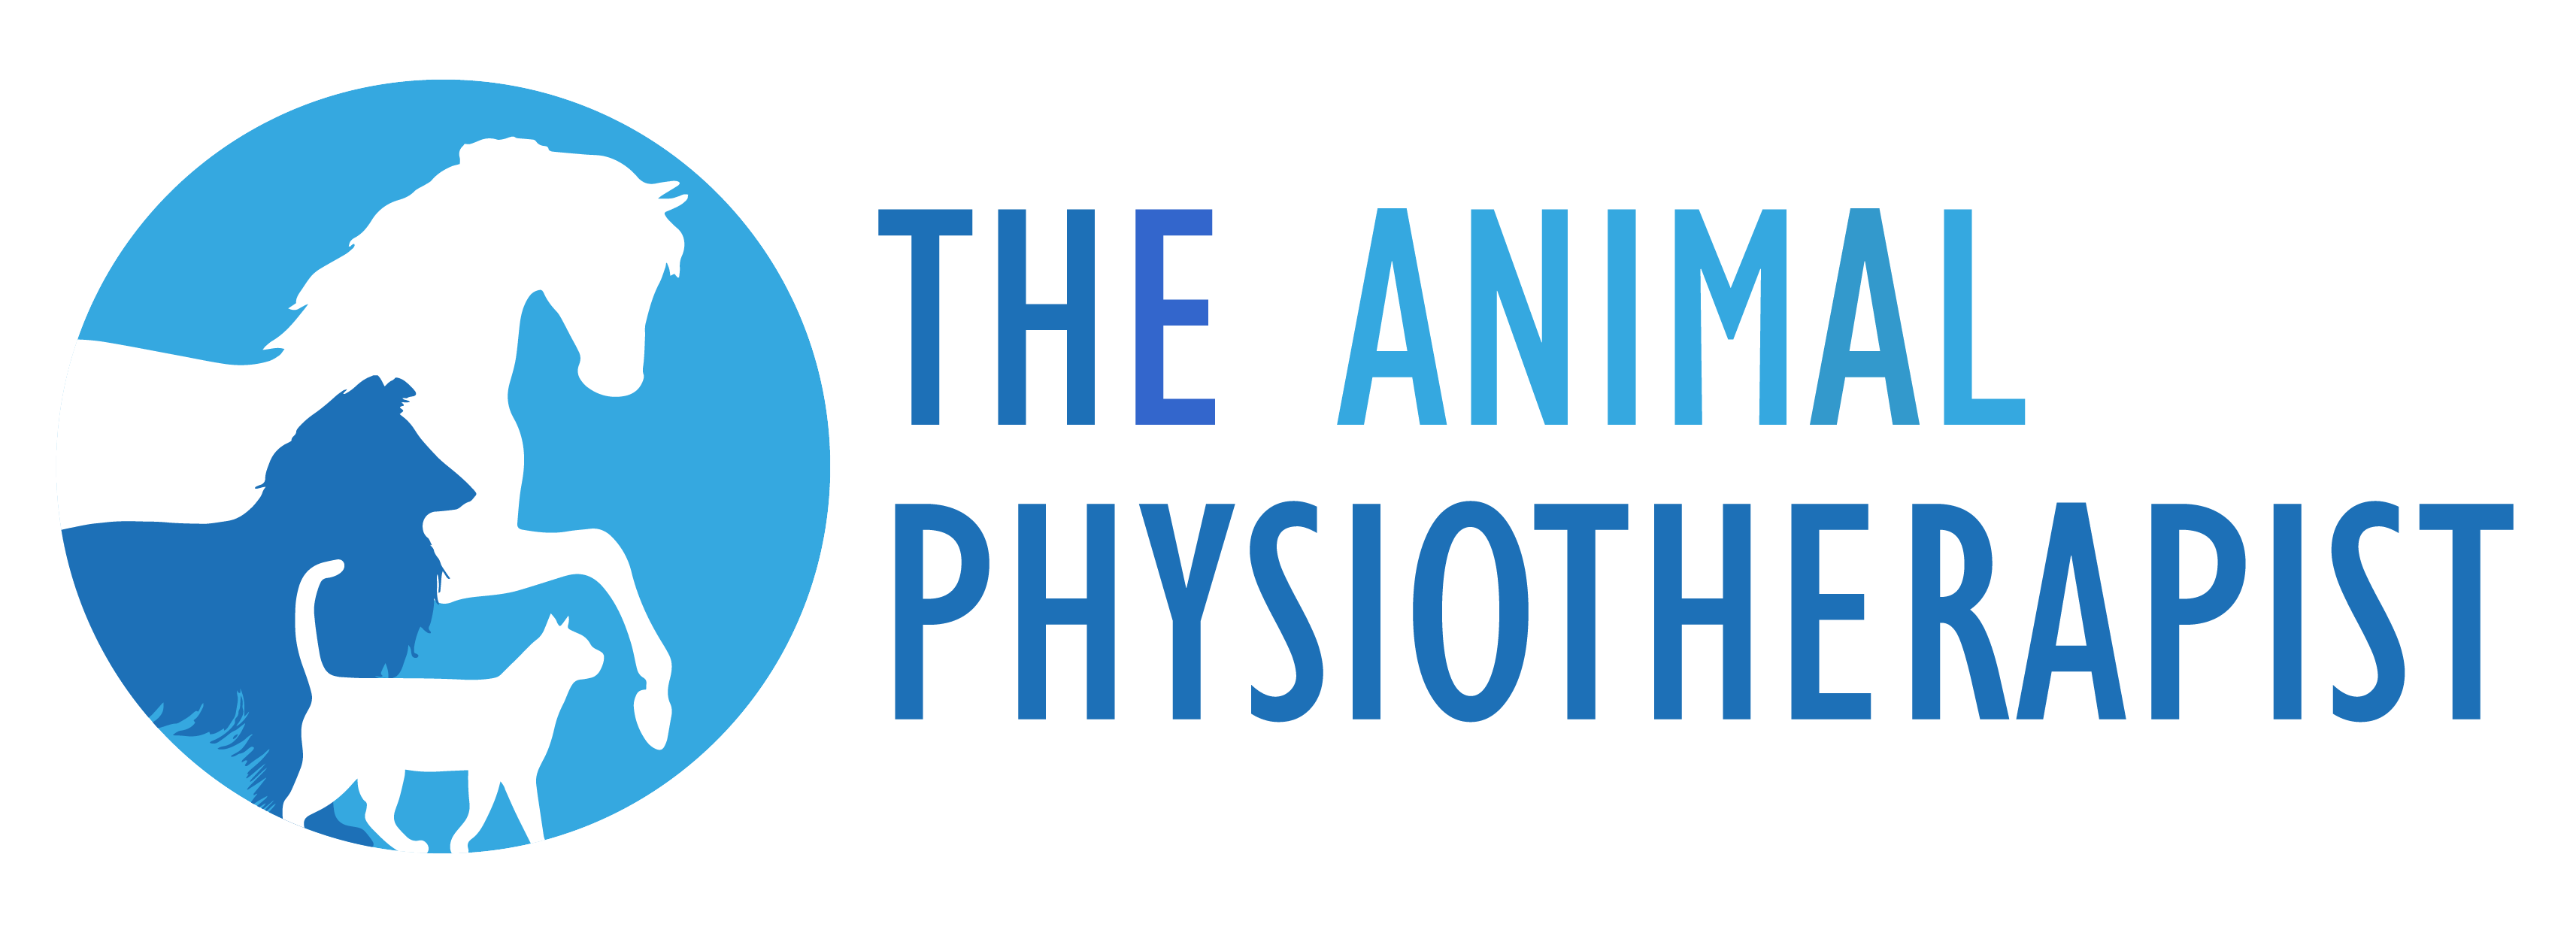 The Animal Physiotherapist